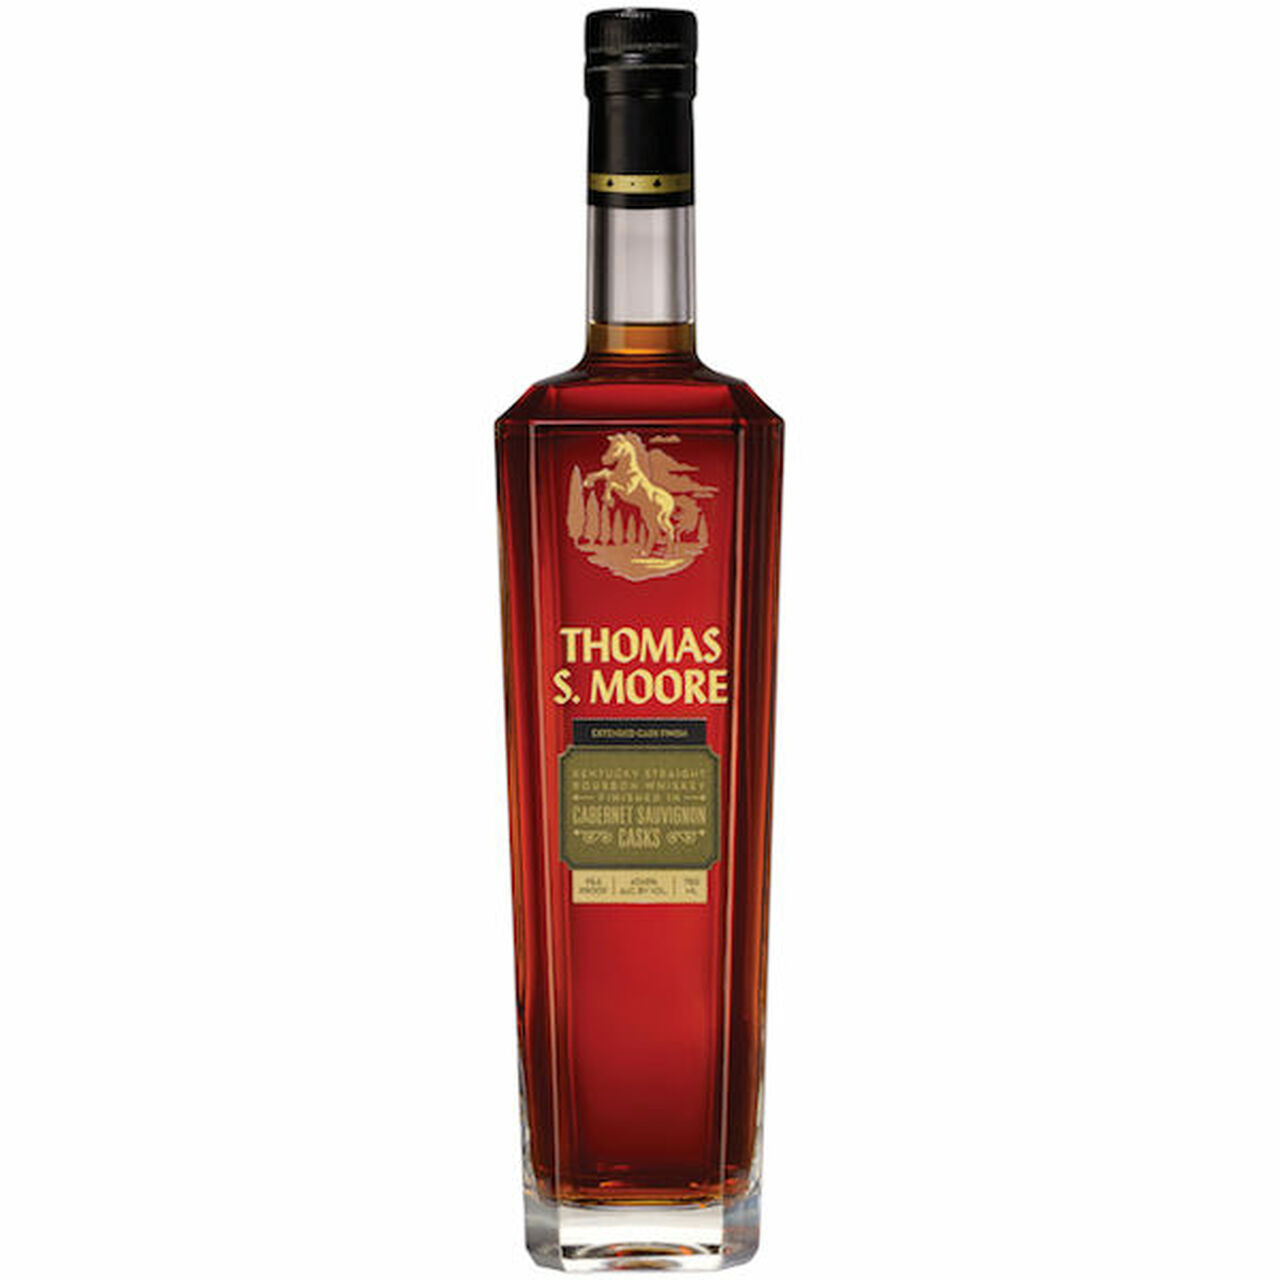 Thomas S. Moore Bourbon Finished In Cabernet Sauvignon Casks